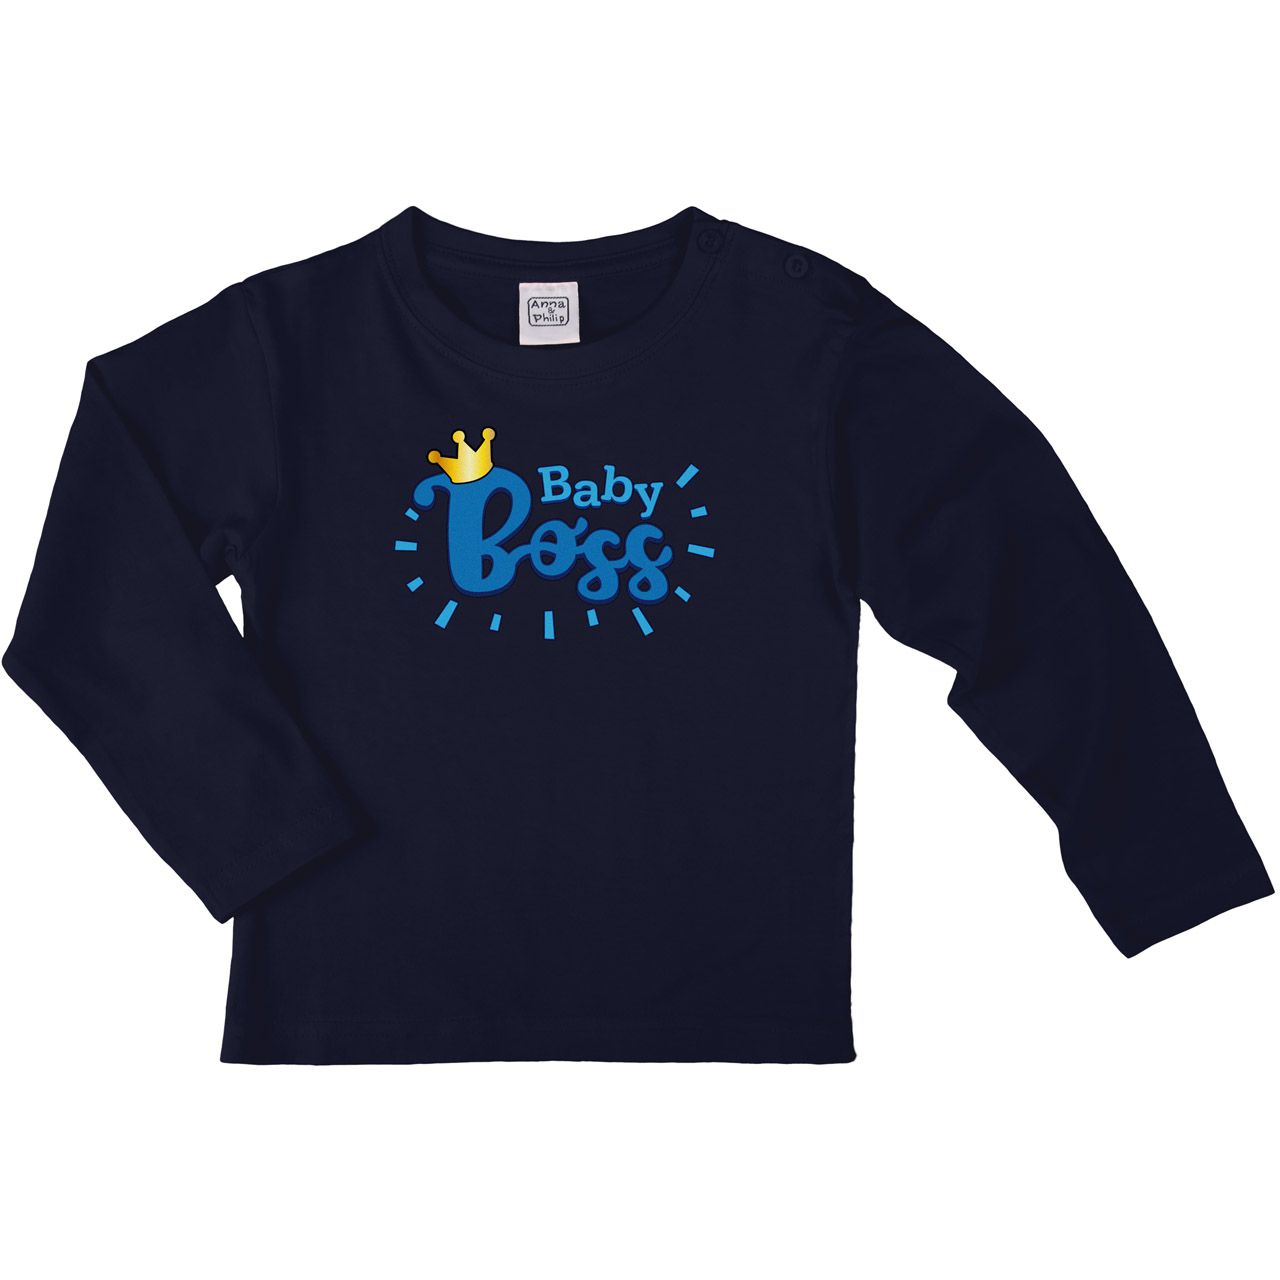 Baby Boss Blau Kinder Langarm Shirt navy 68 / 74